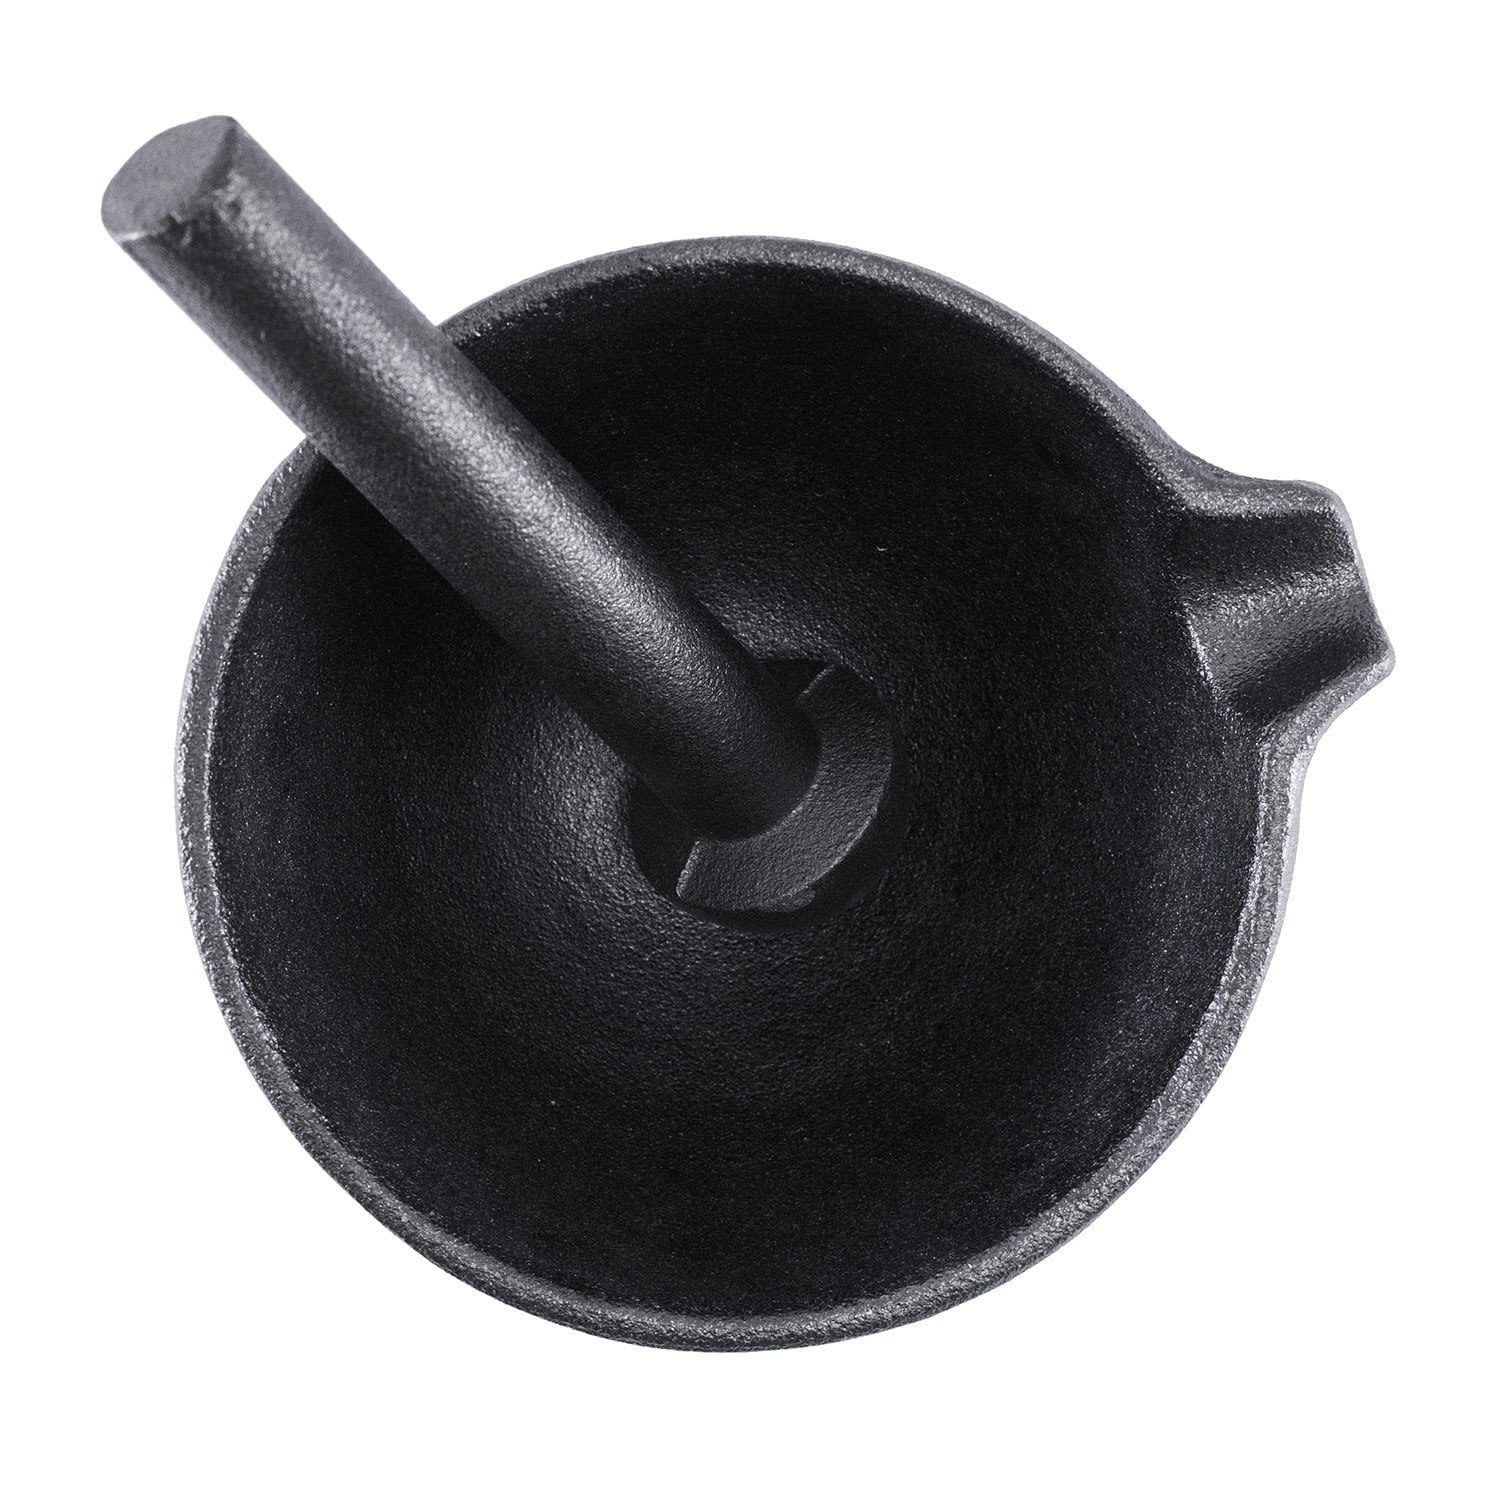 https://royaldesign.com/image/2/satake-nabe-mortar-with-pestle-black-1